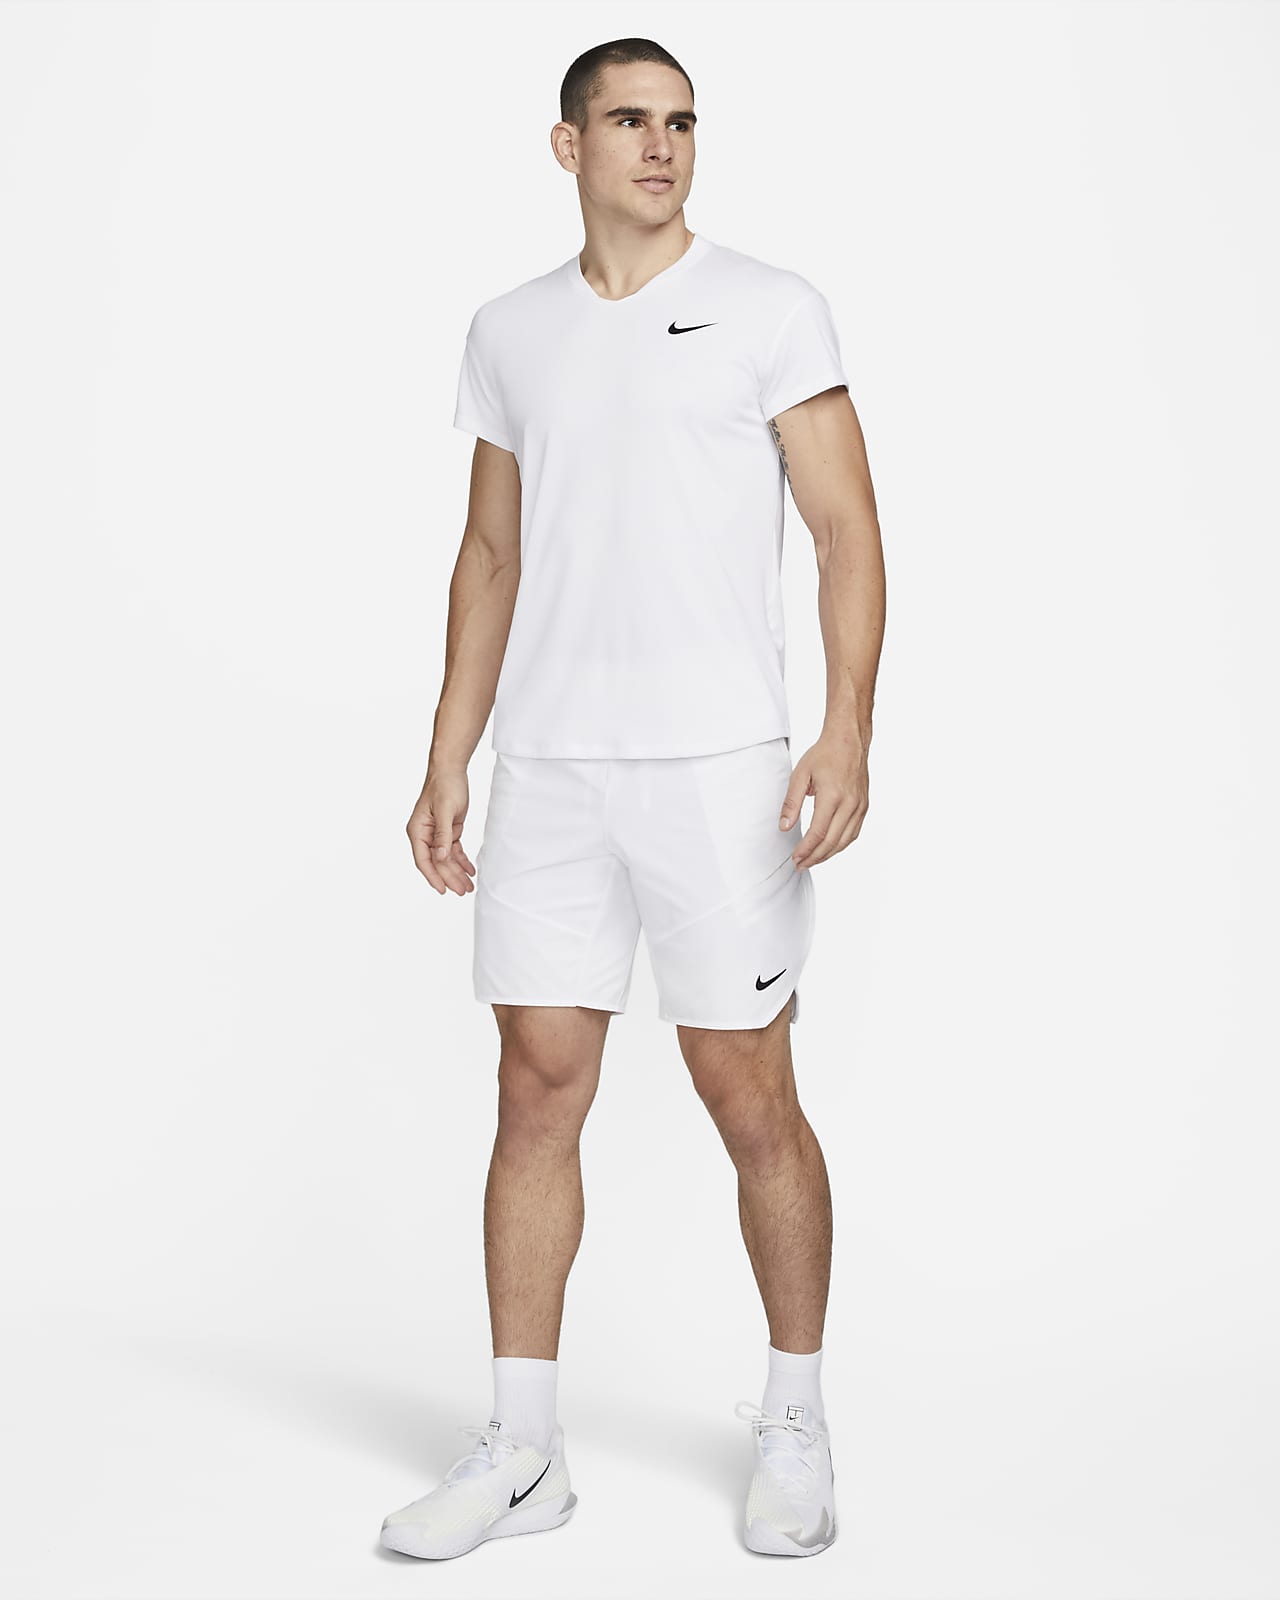 Men's Tennis Shorts, Nike, adidas, Slazenger